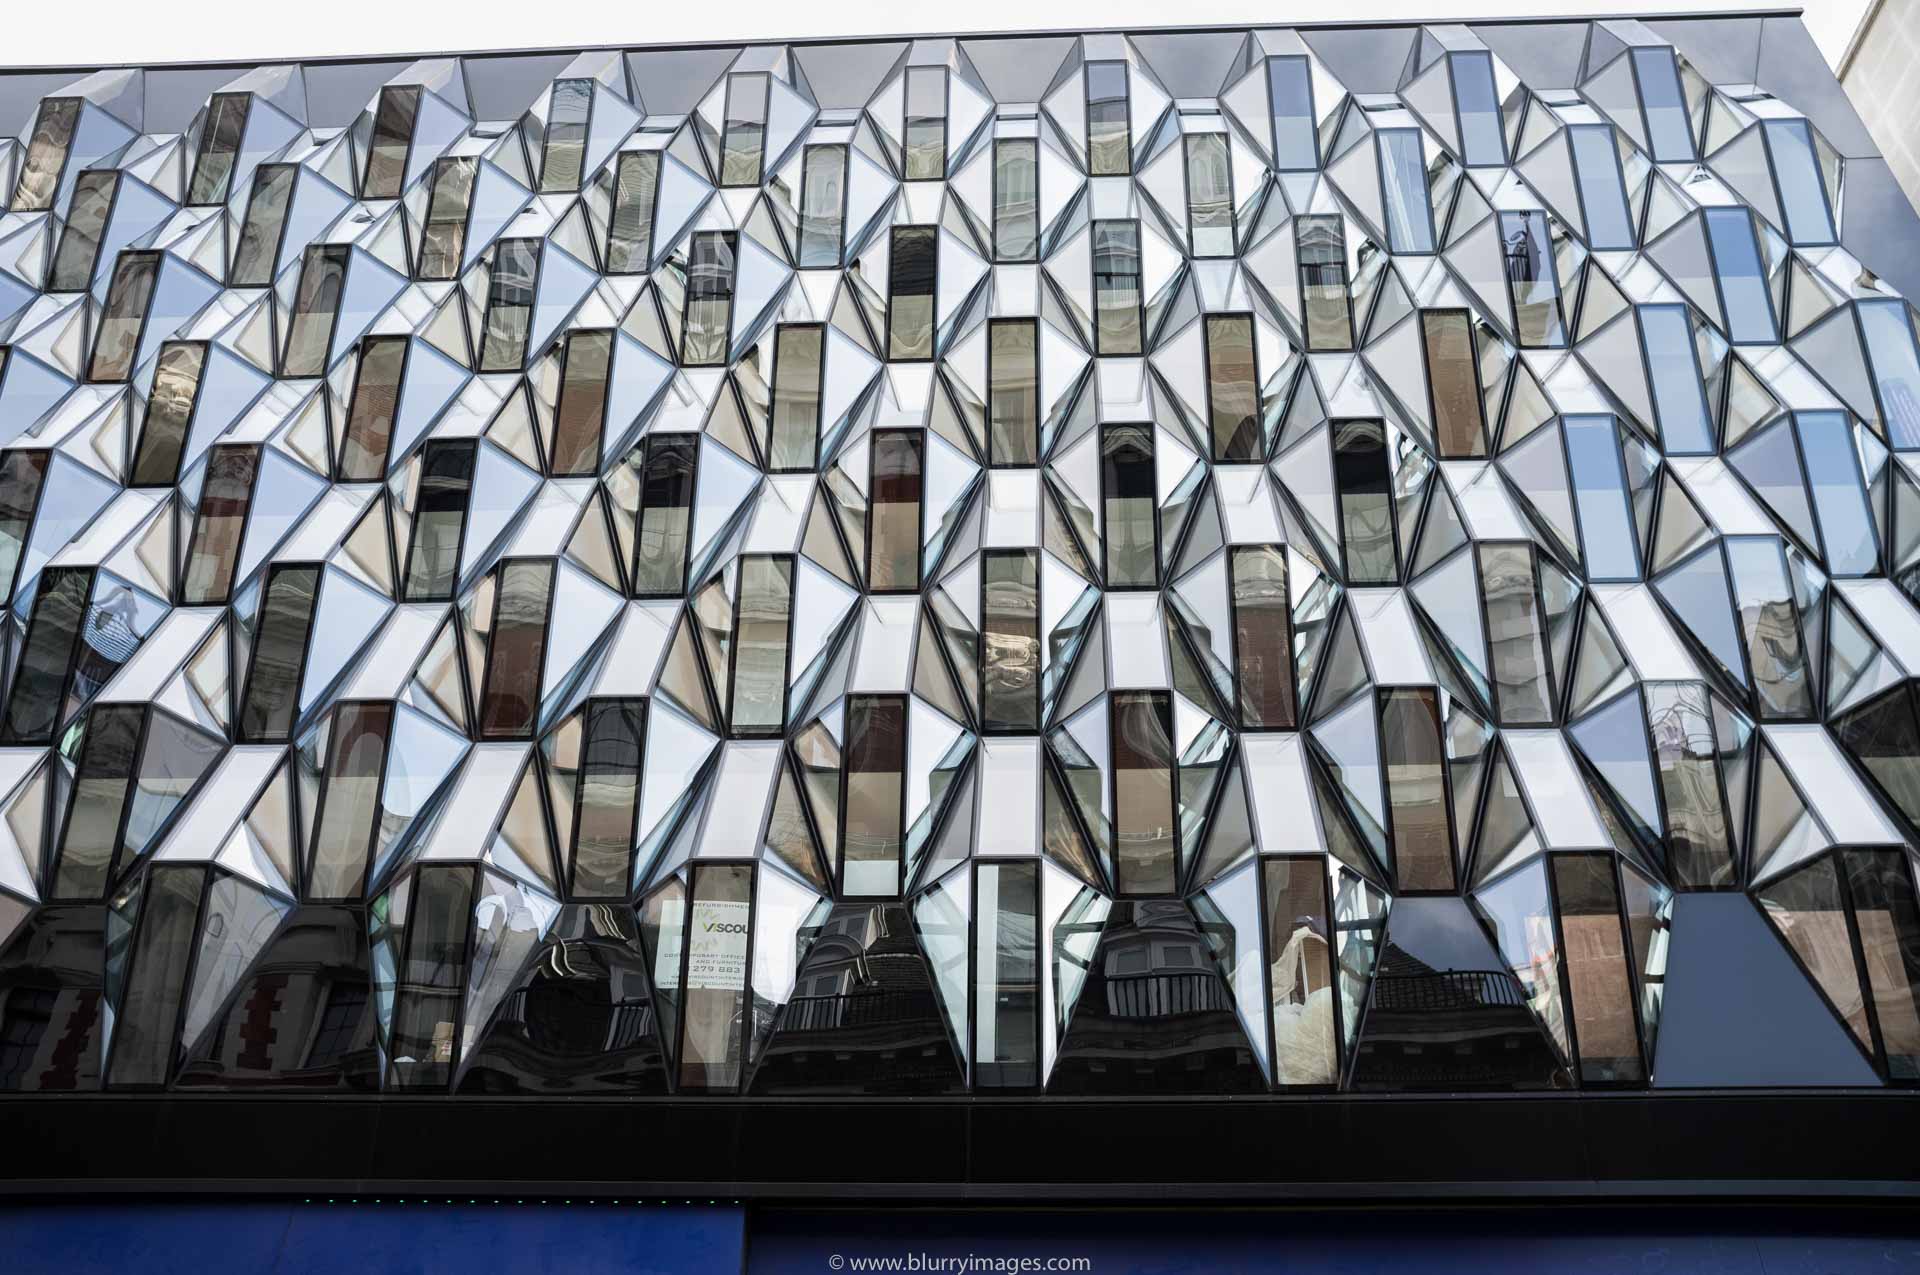 building exterior, glass - material, window, modern, reflection, London - England, architecture, development, skyscraper, outdoors, reflex, glass,